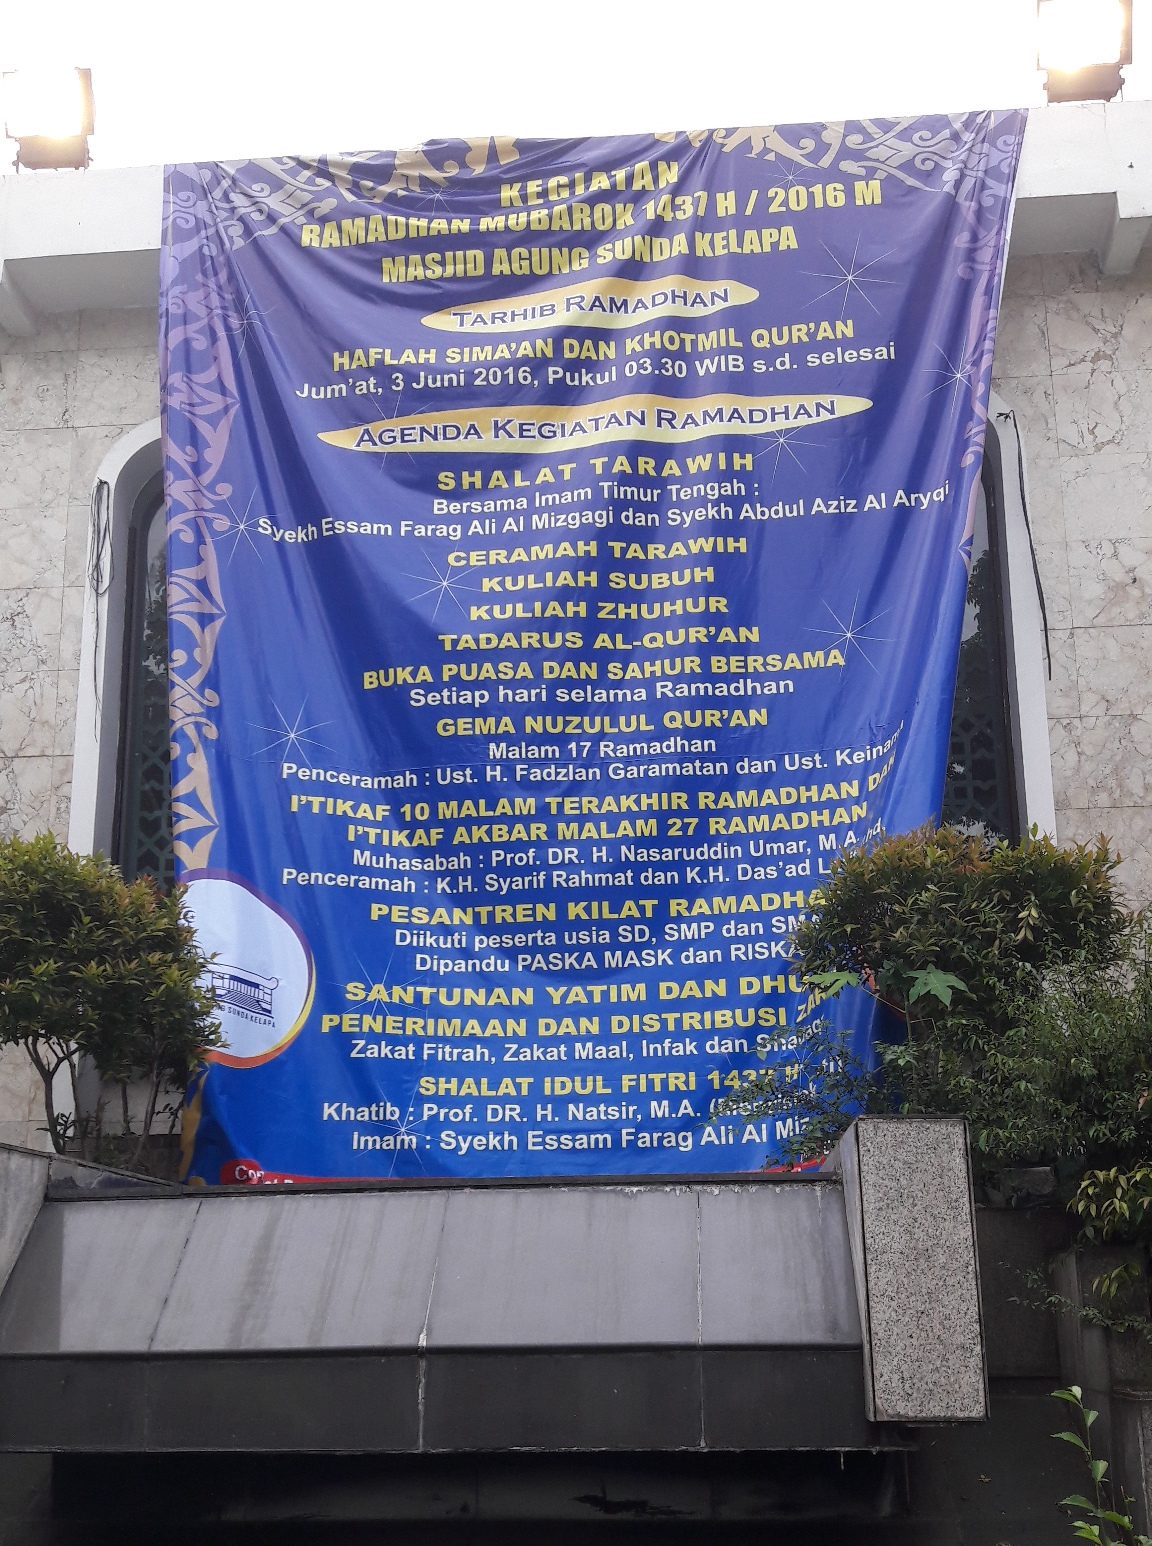 Daftar kegiatan Ramadan di Masjid Agung Sunda Kelapa. Foto oleh Sakinah Ummu Haniy/Rappler 